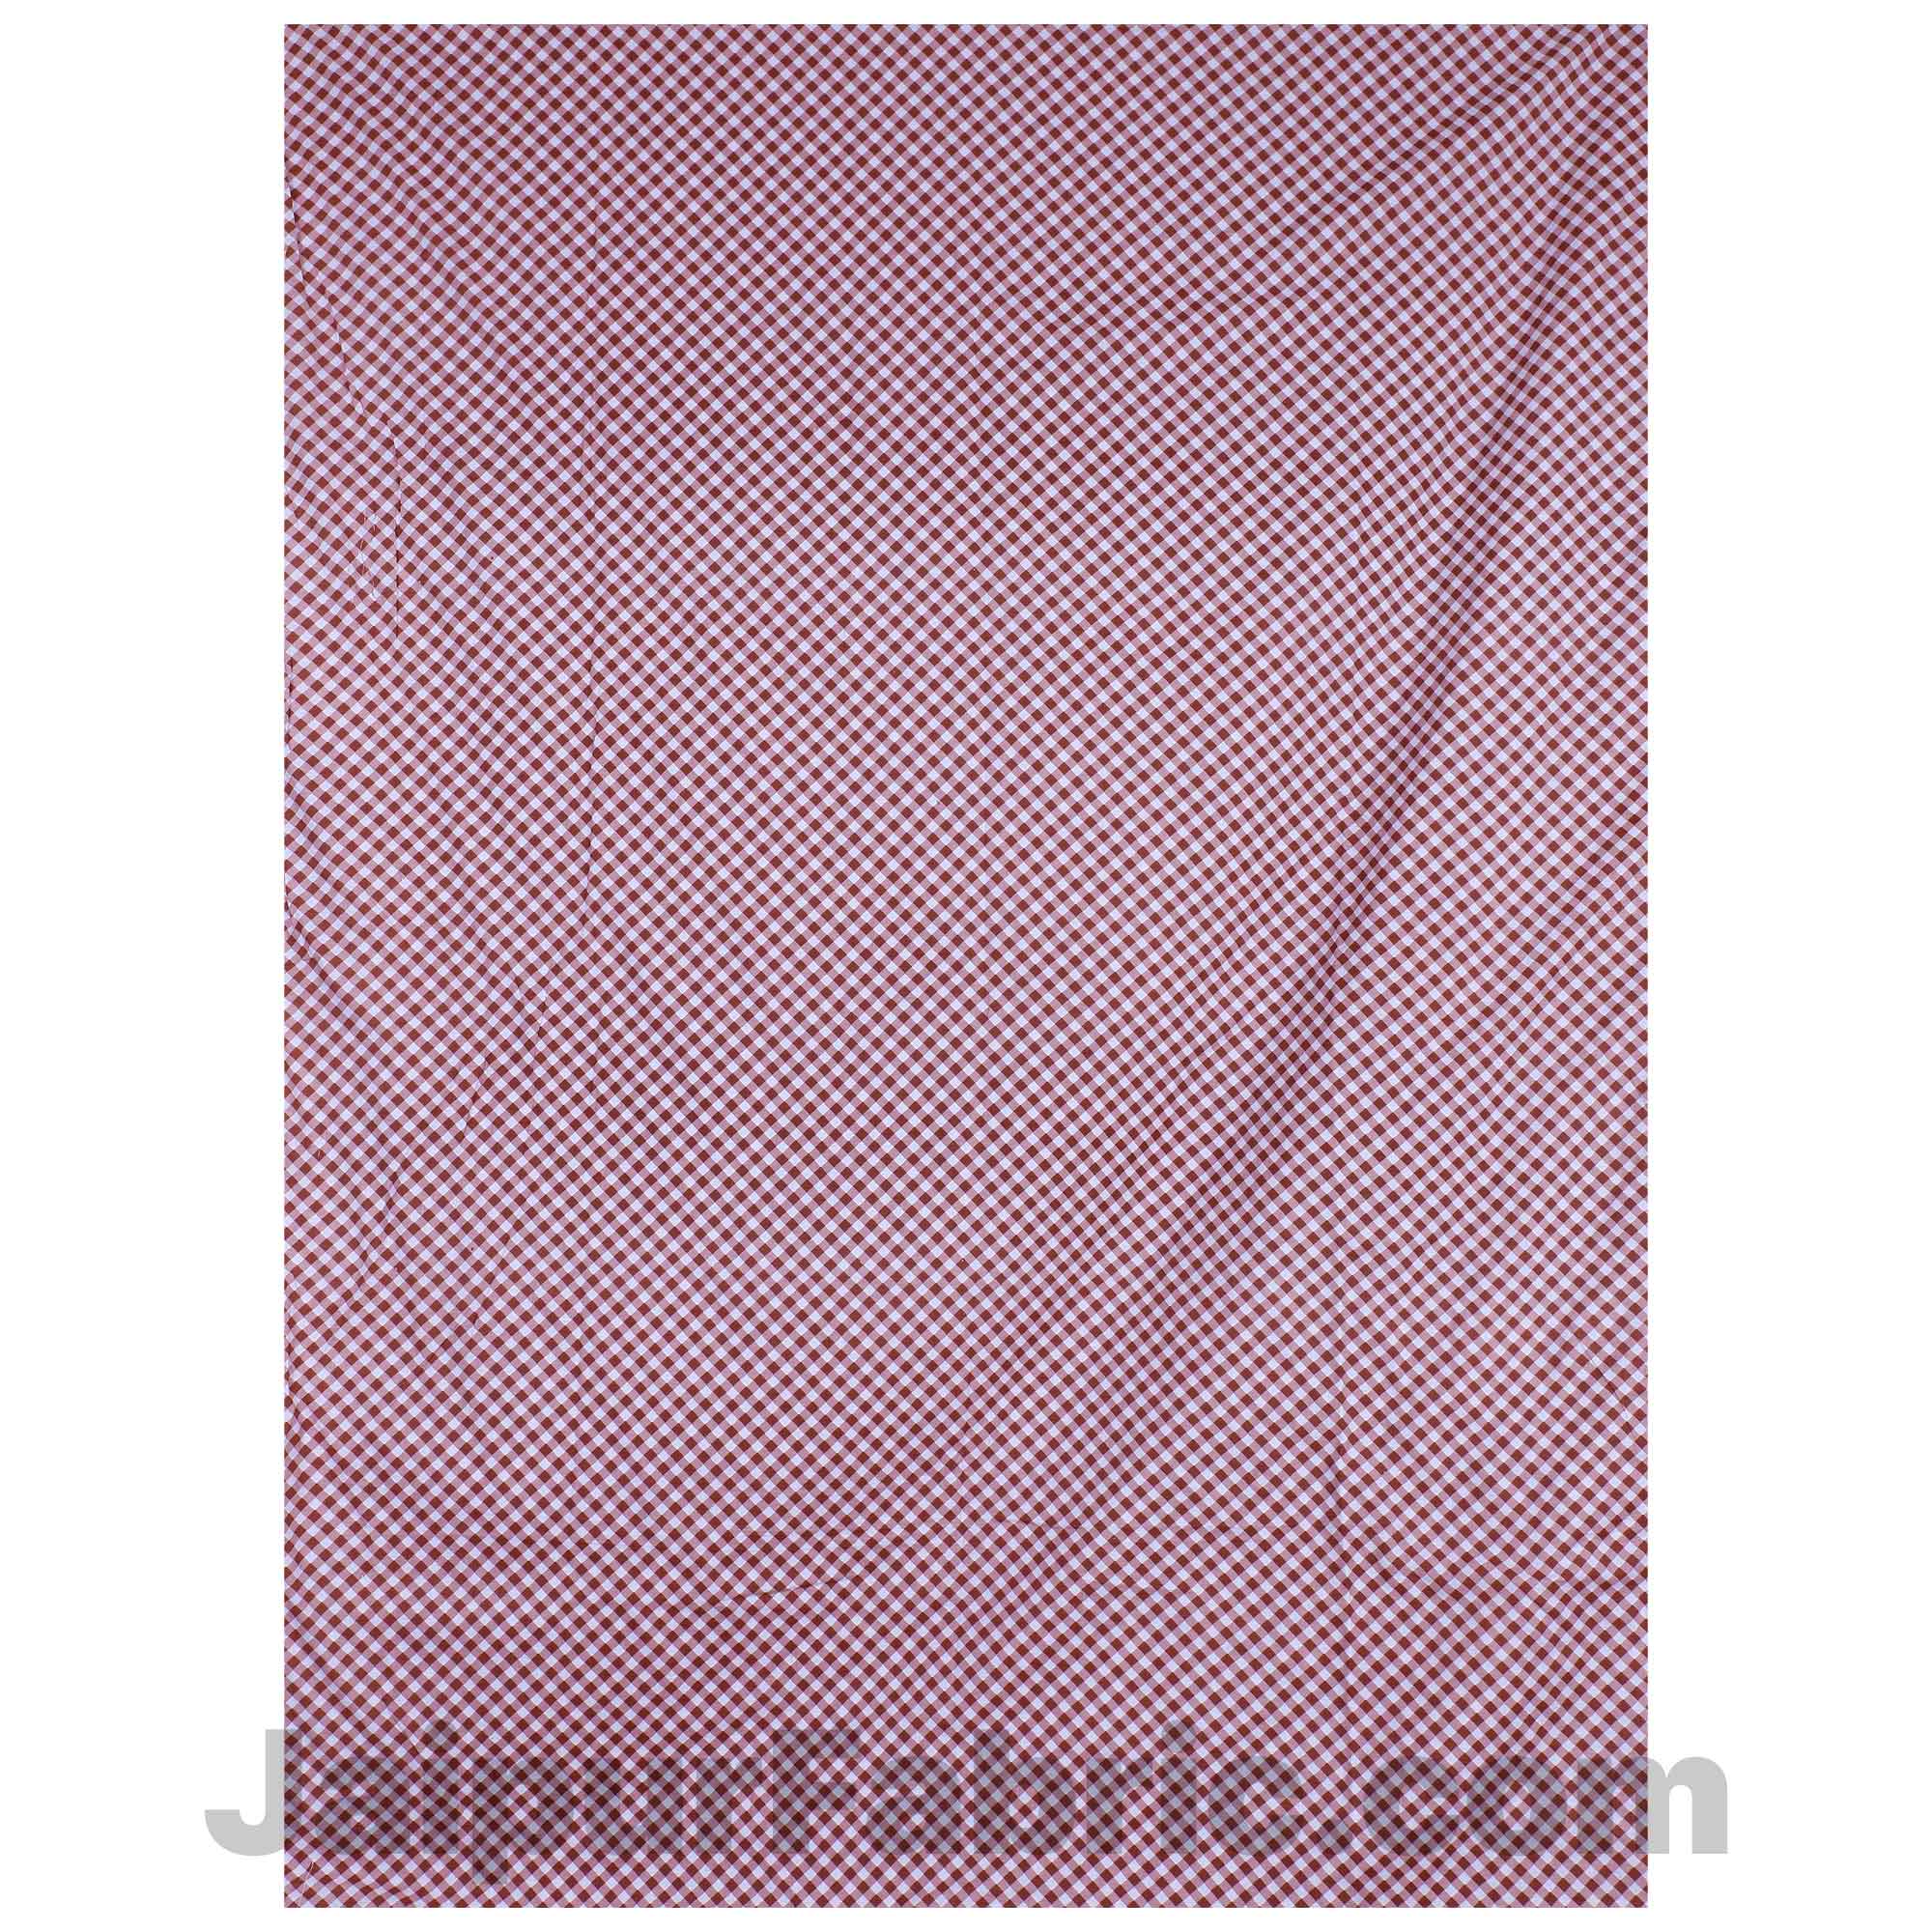 Pure Cotton Ethnic Print Reversible Single Bed Blanket/ Duvet/Quilt/AC Dohar